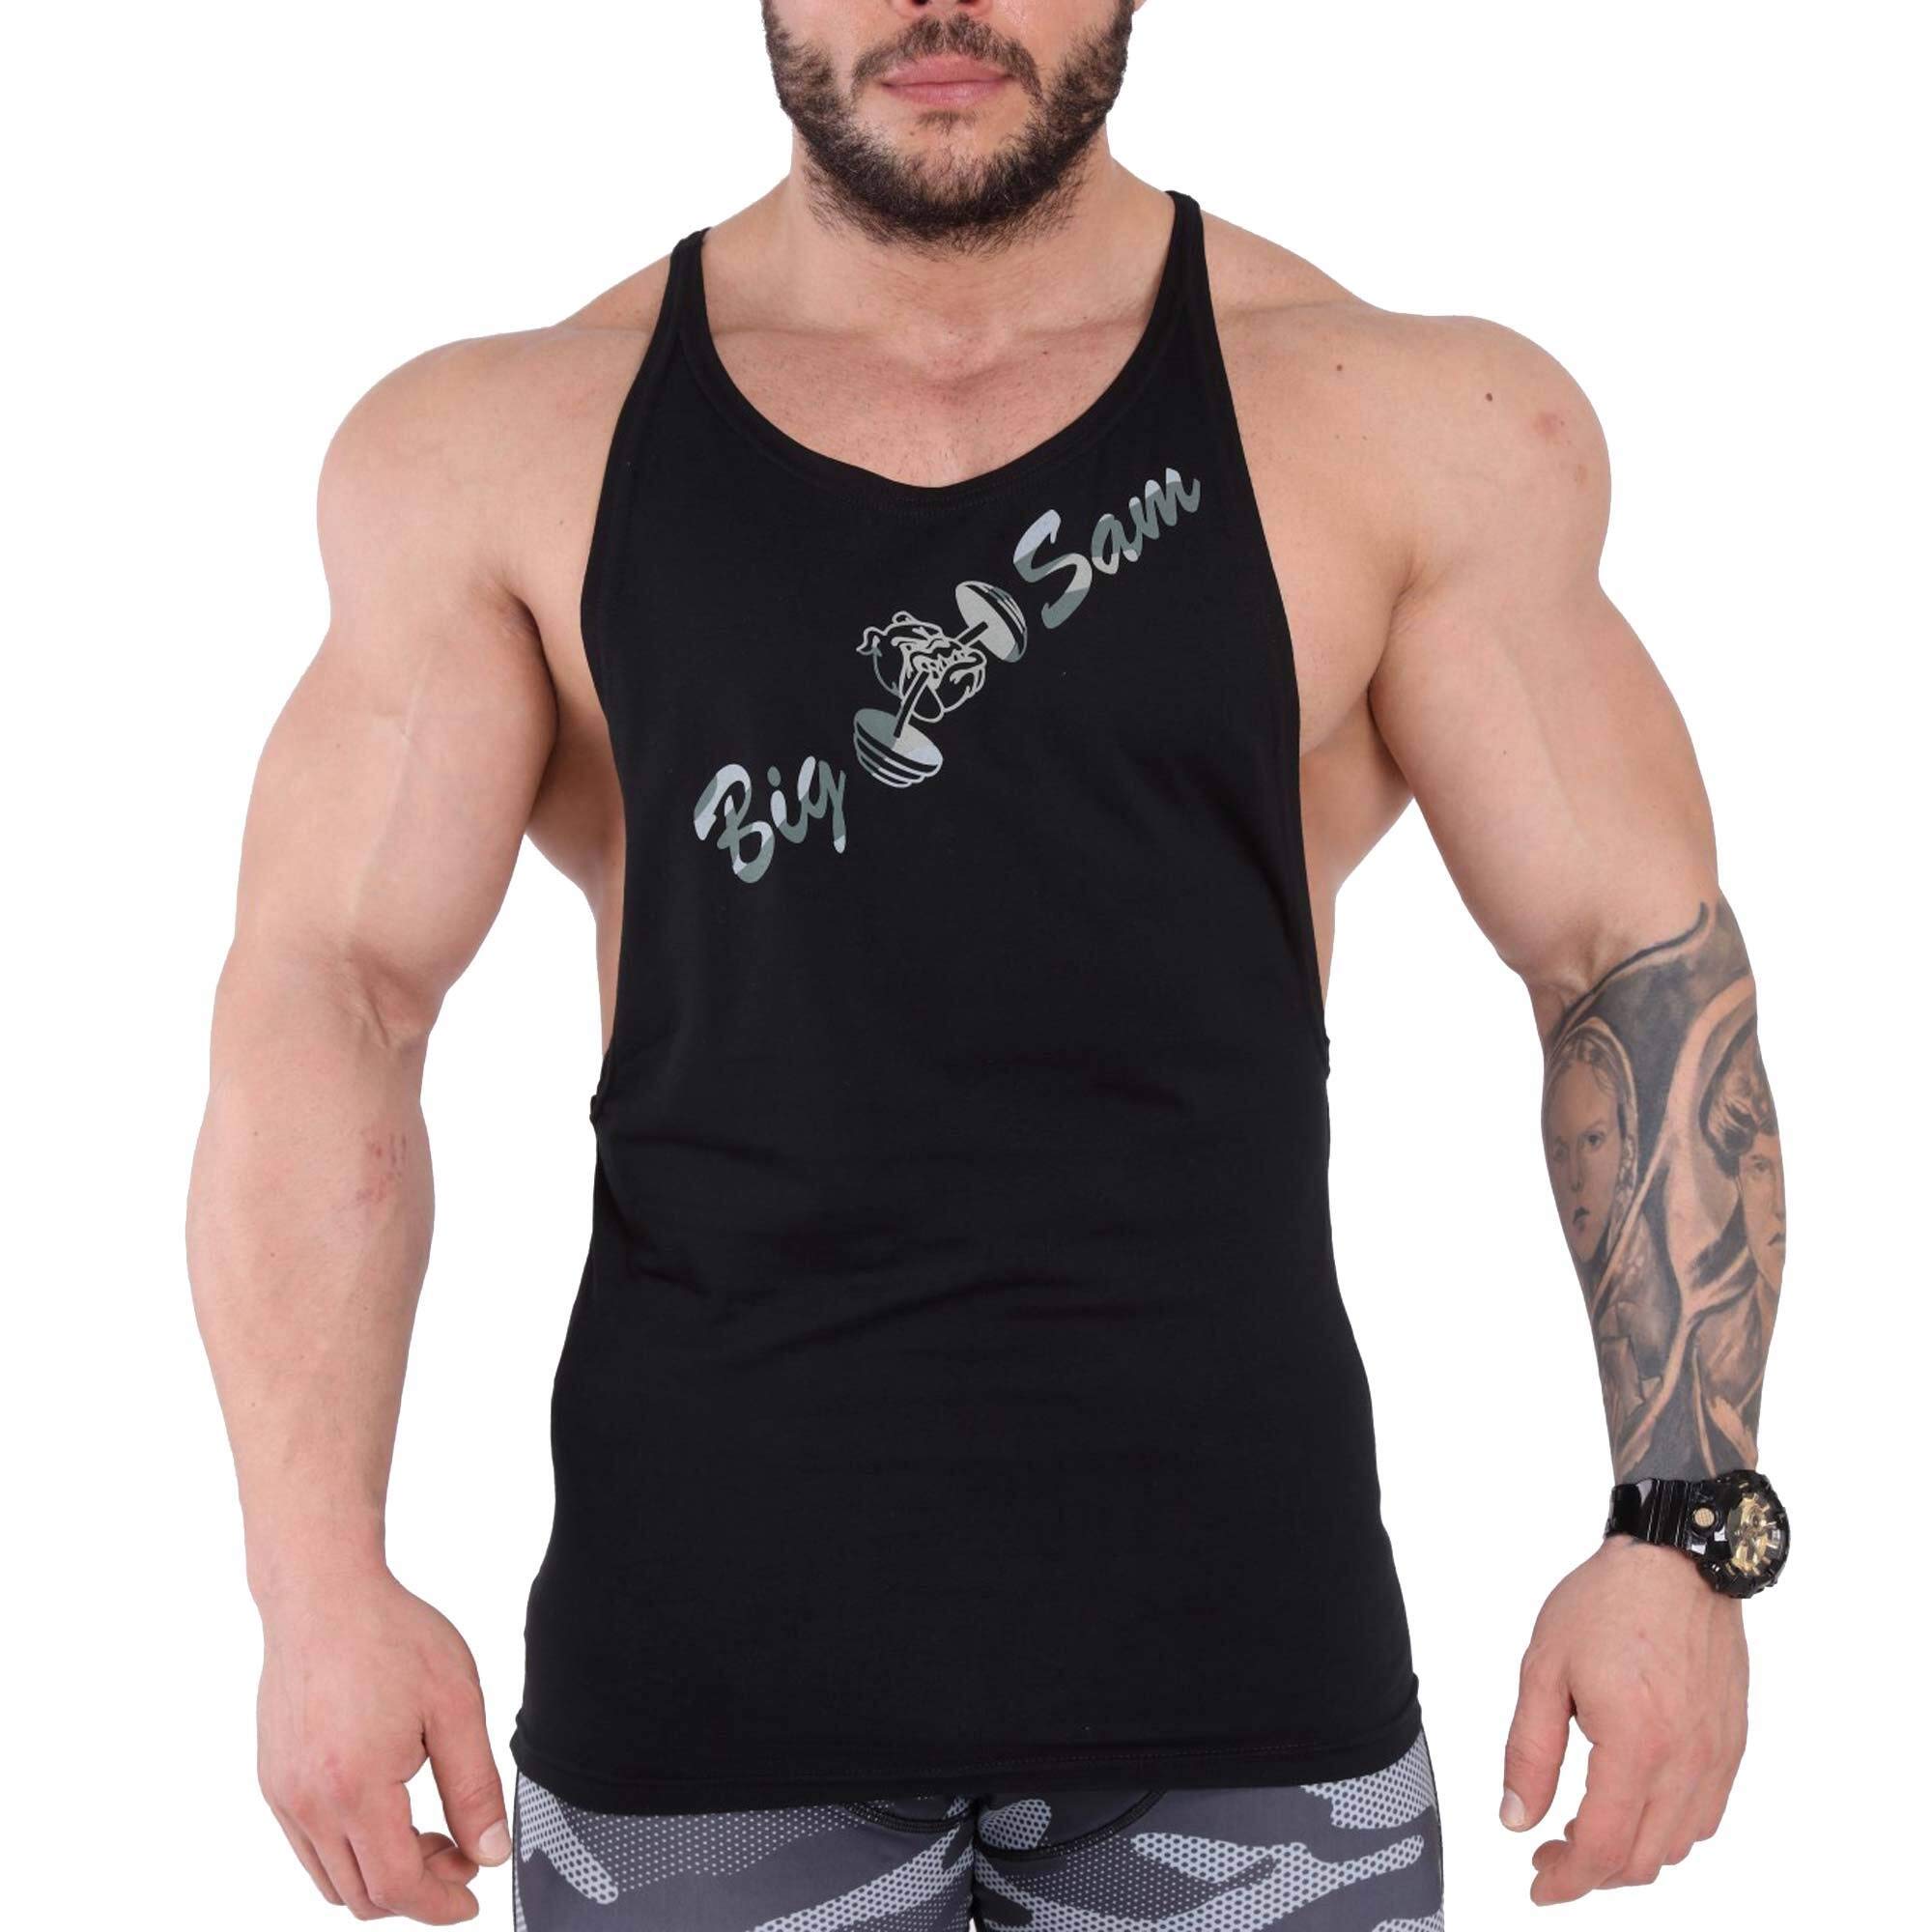 Big SM Sportswear MUSCLEWEAR Muskelshirt Tank Top Tanktop Achselshirt Stringer Bodybuilding Herren 2227 schwarz 3XL